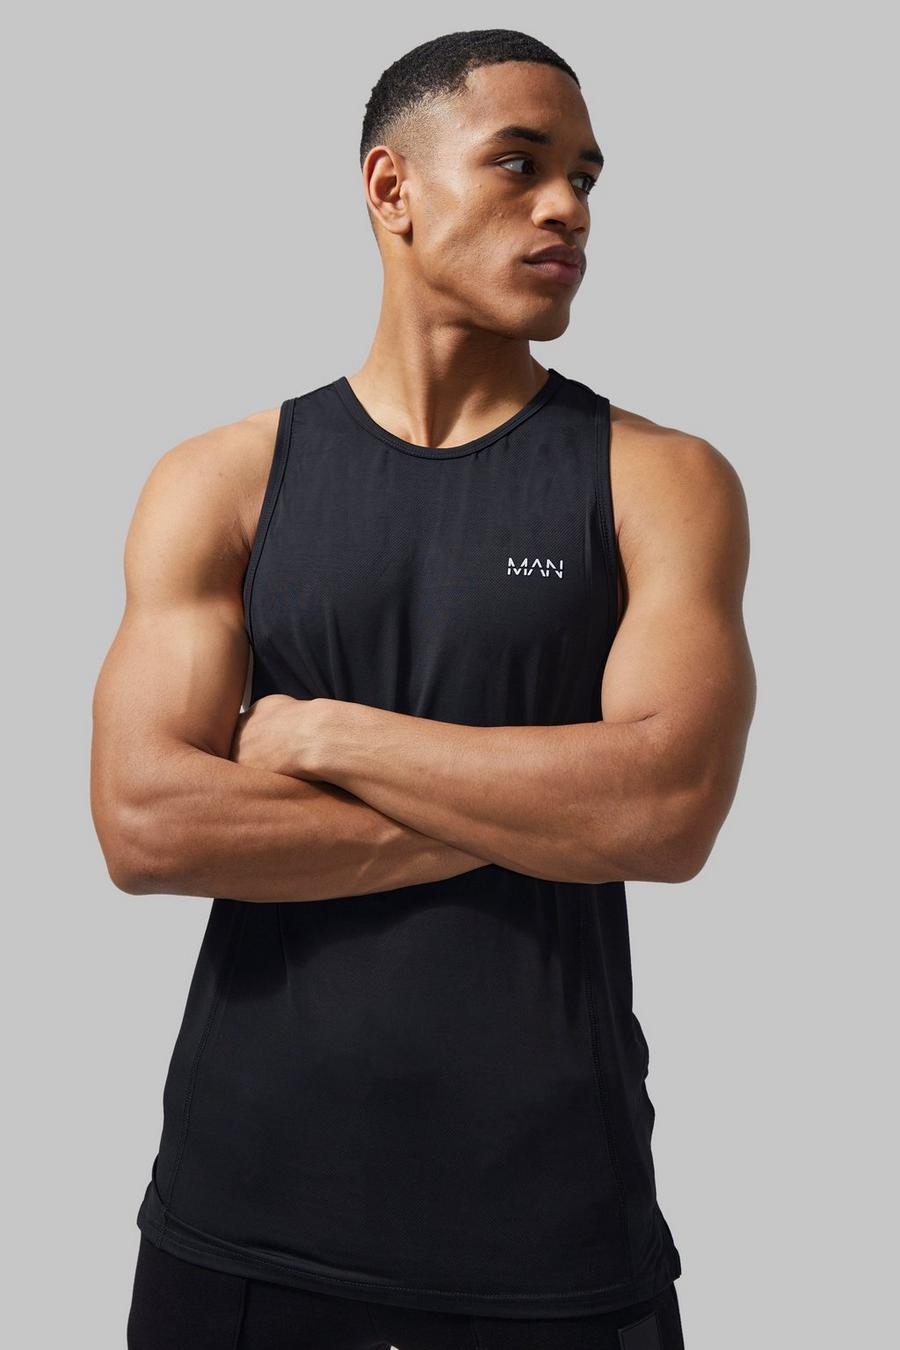 Camiseta sin mangas MAN Active ligera jaspeada estilo nadador, Black nero